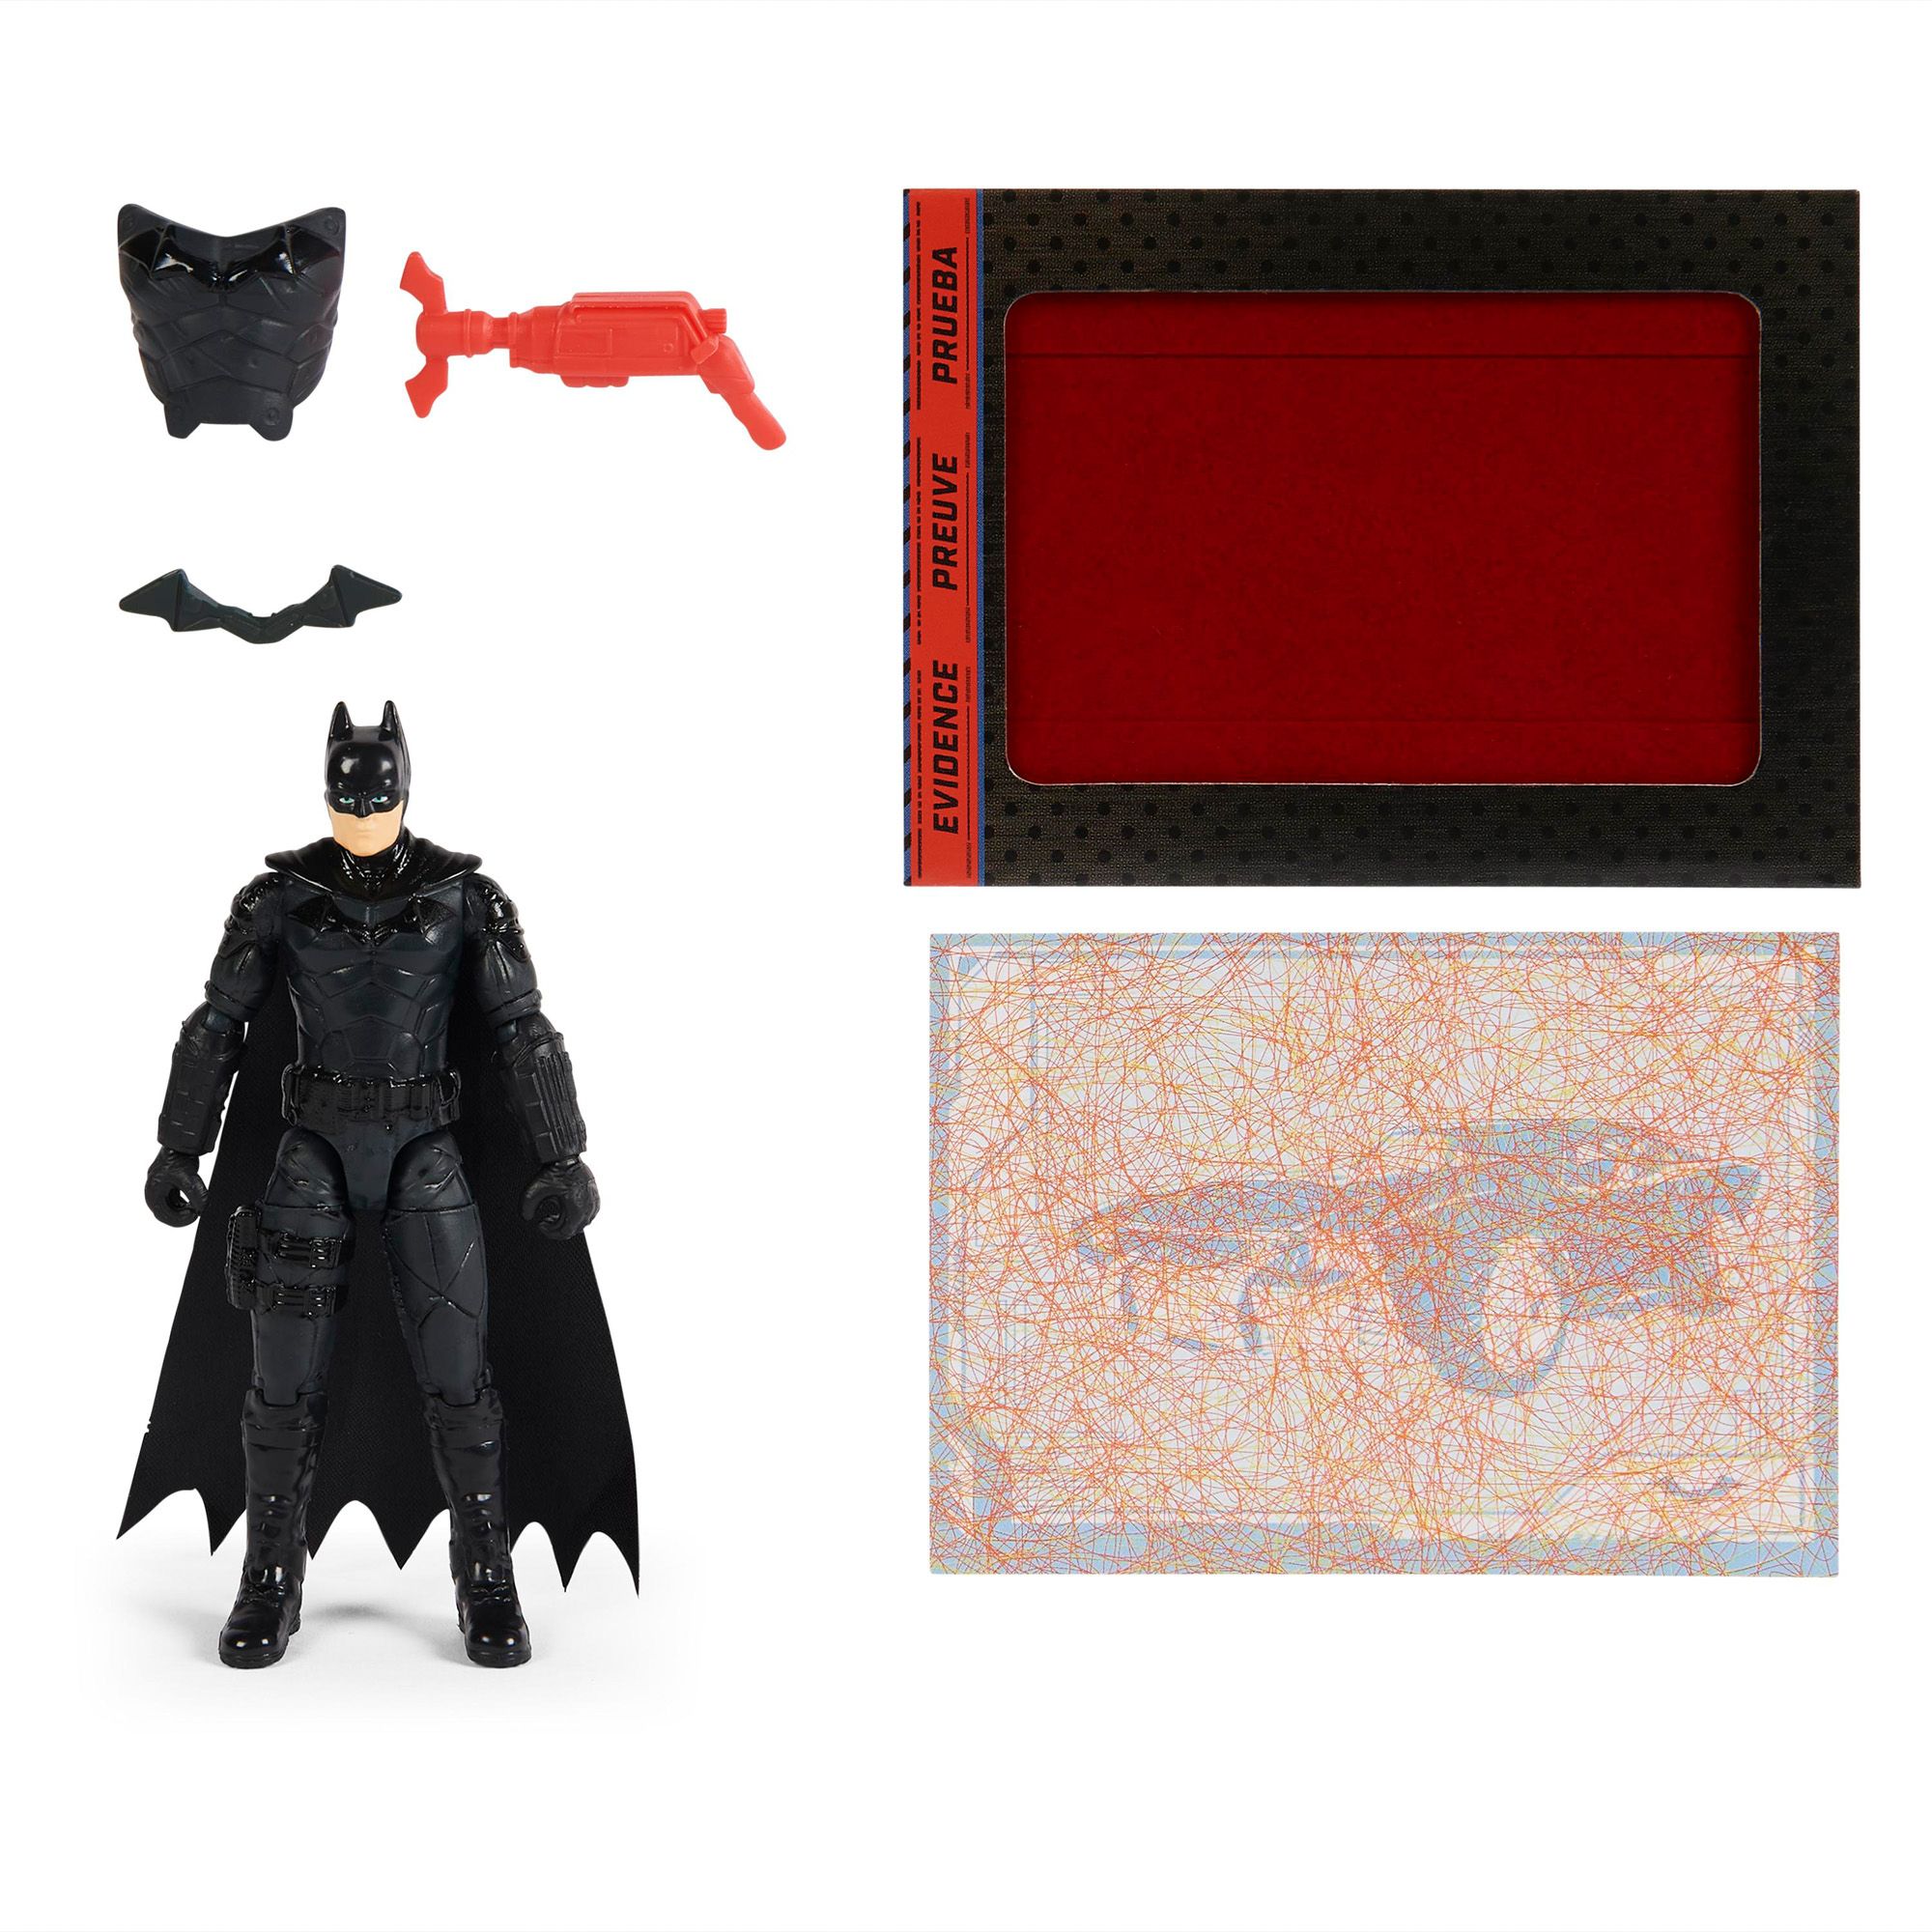 The Batman 4-Inch Figure Contents